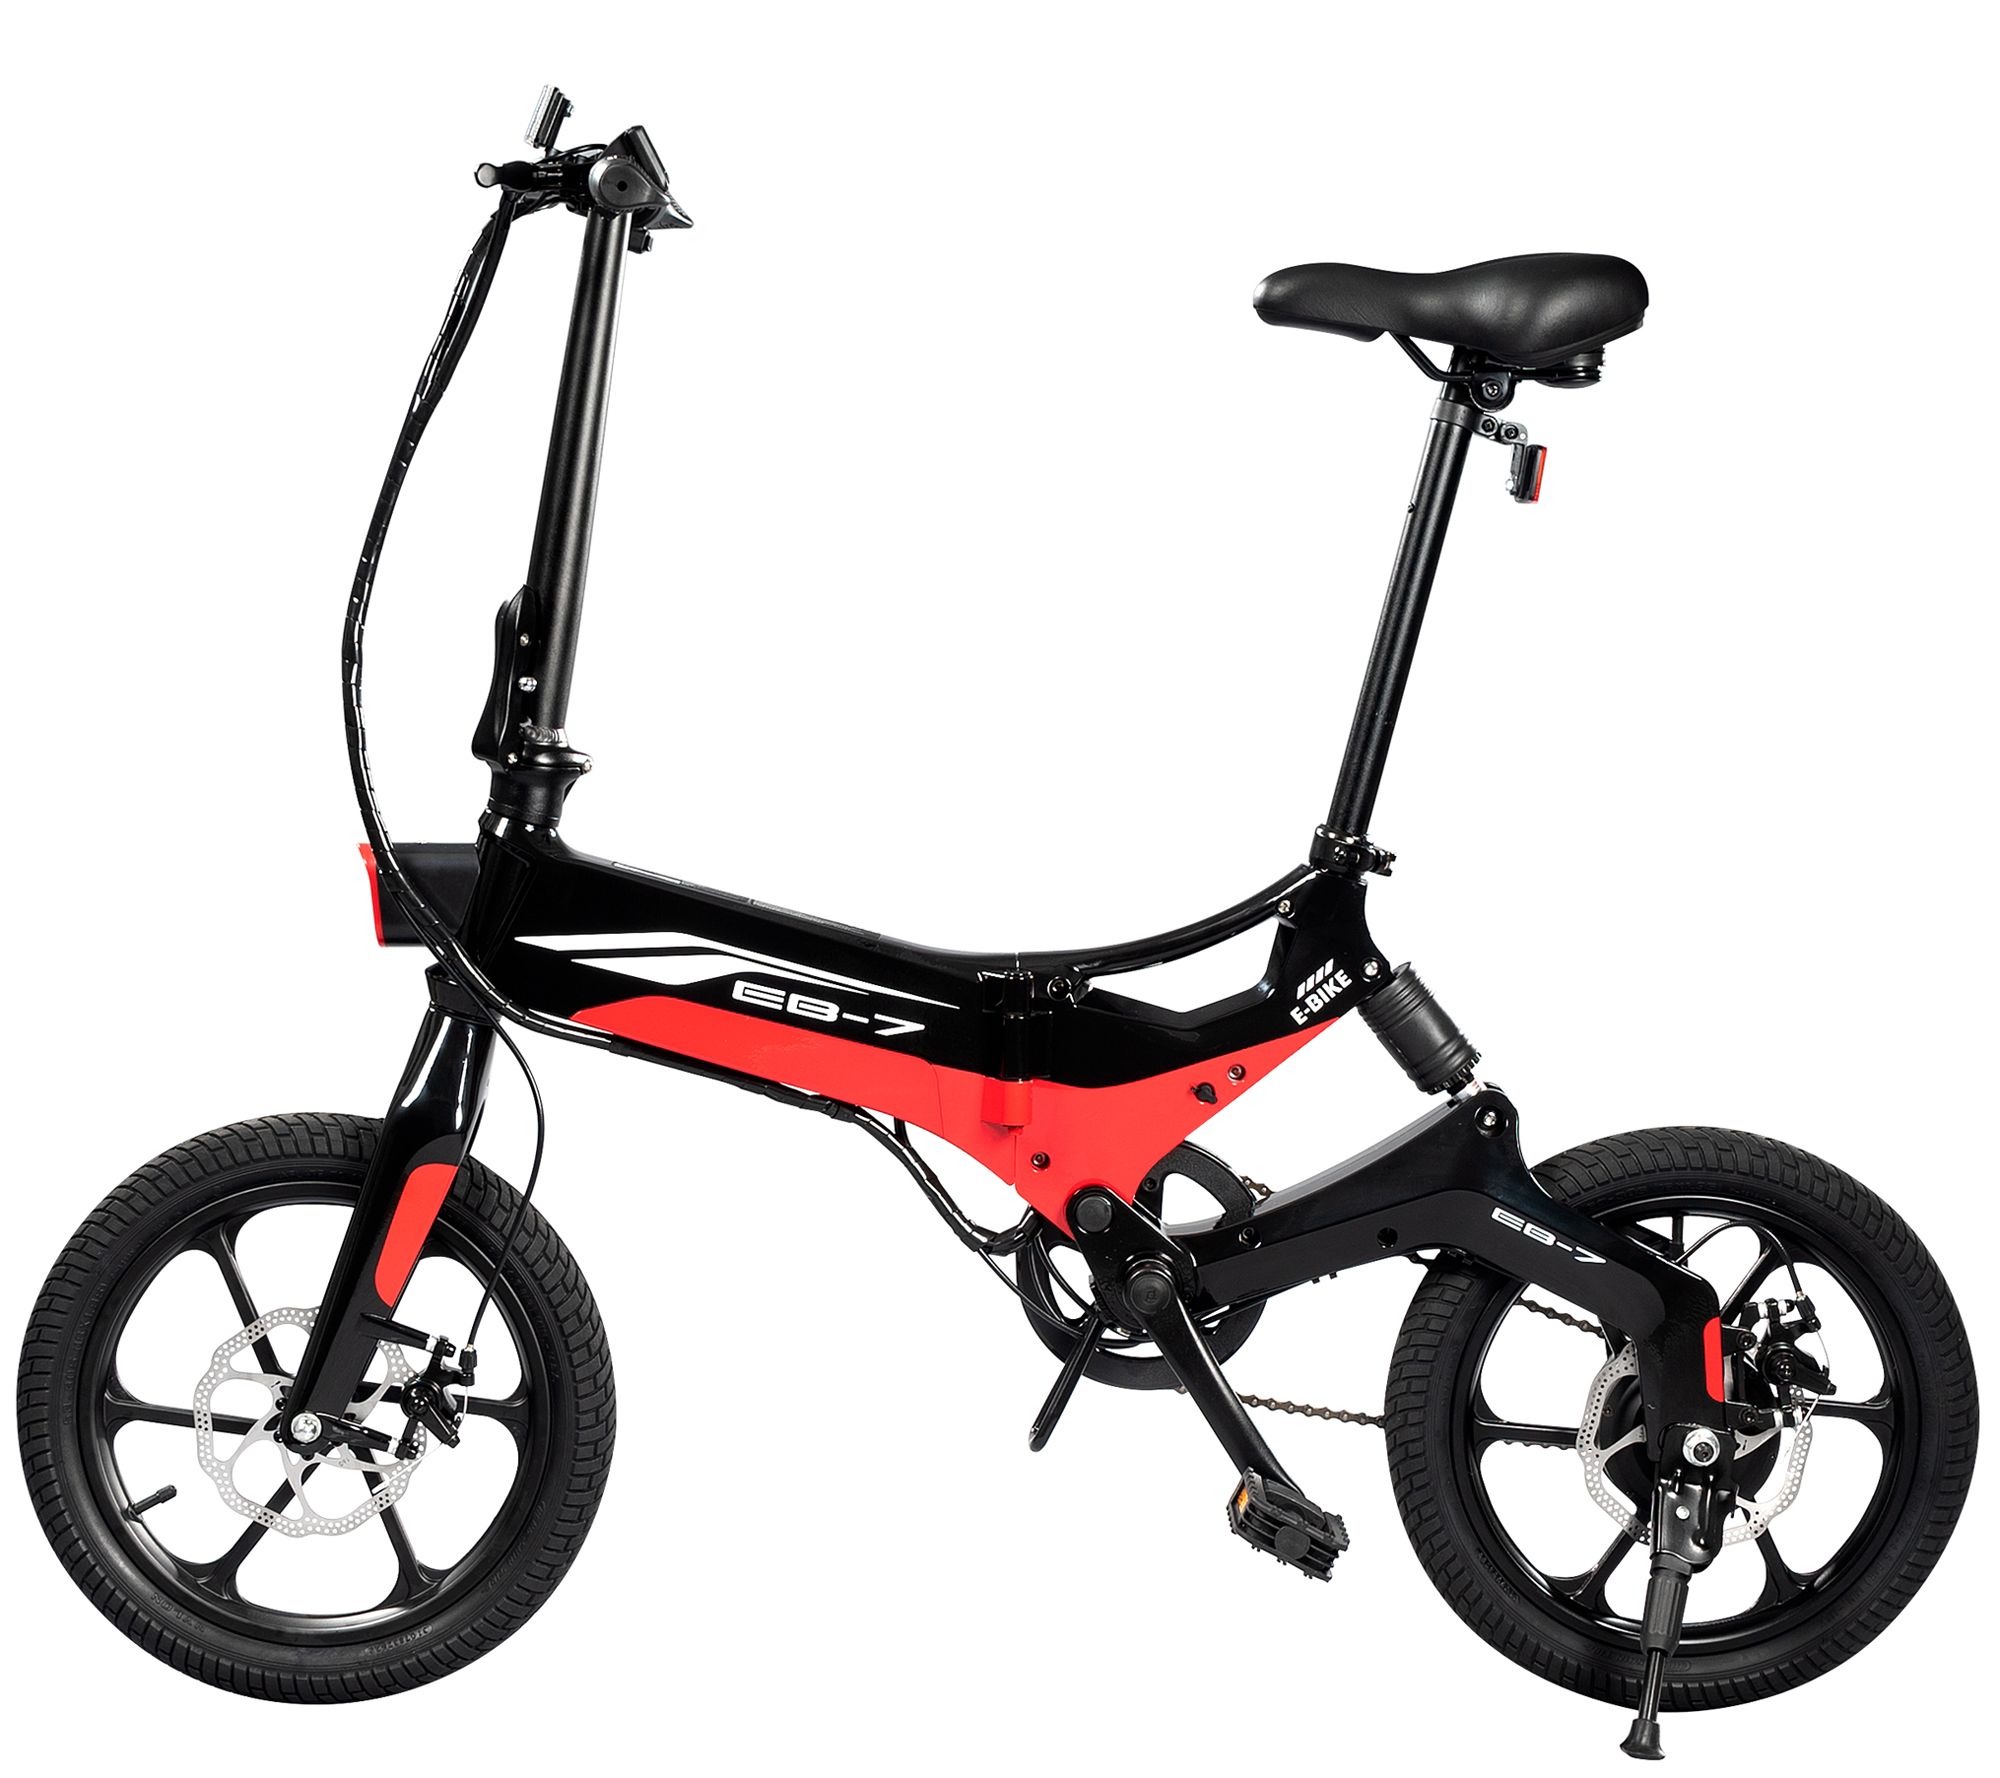 swagtron eb7 elite folding electric bike